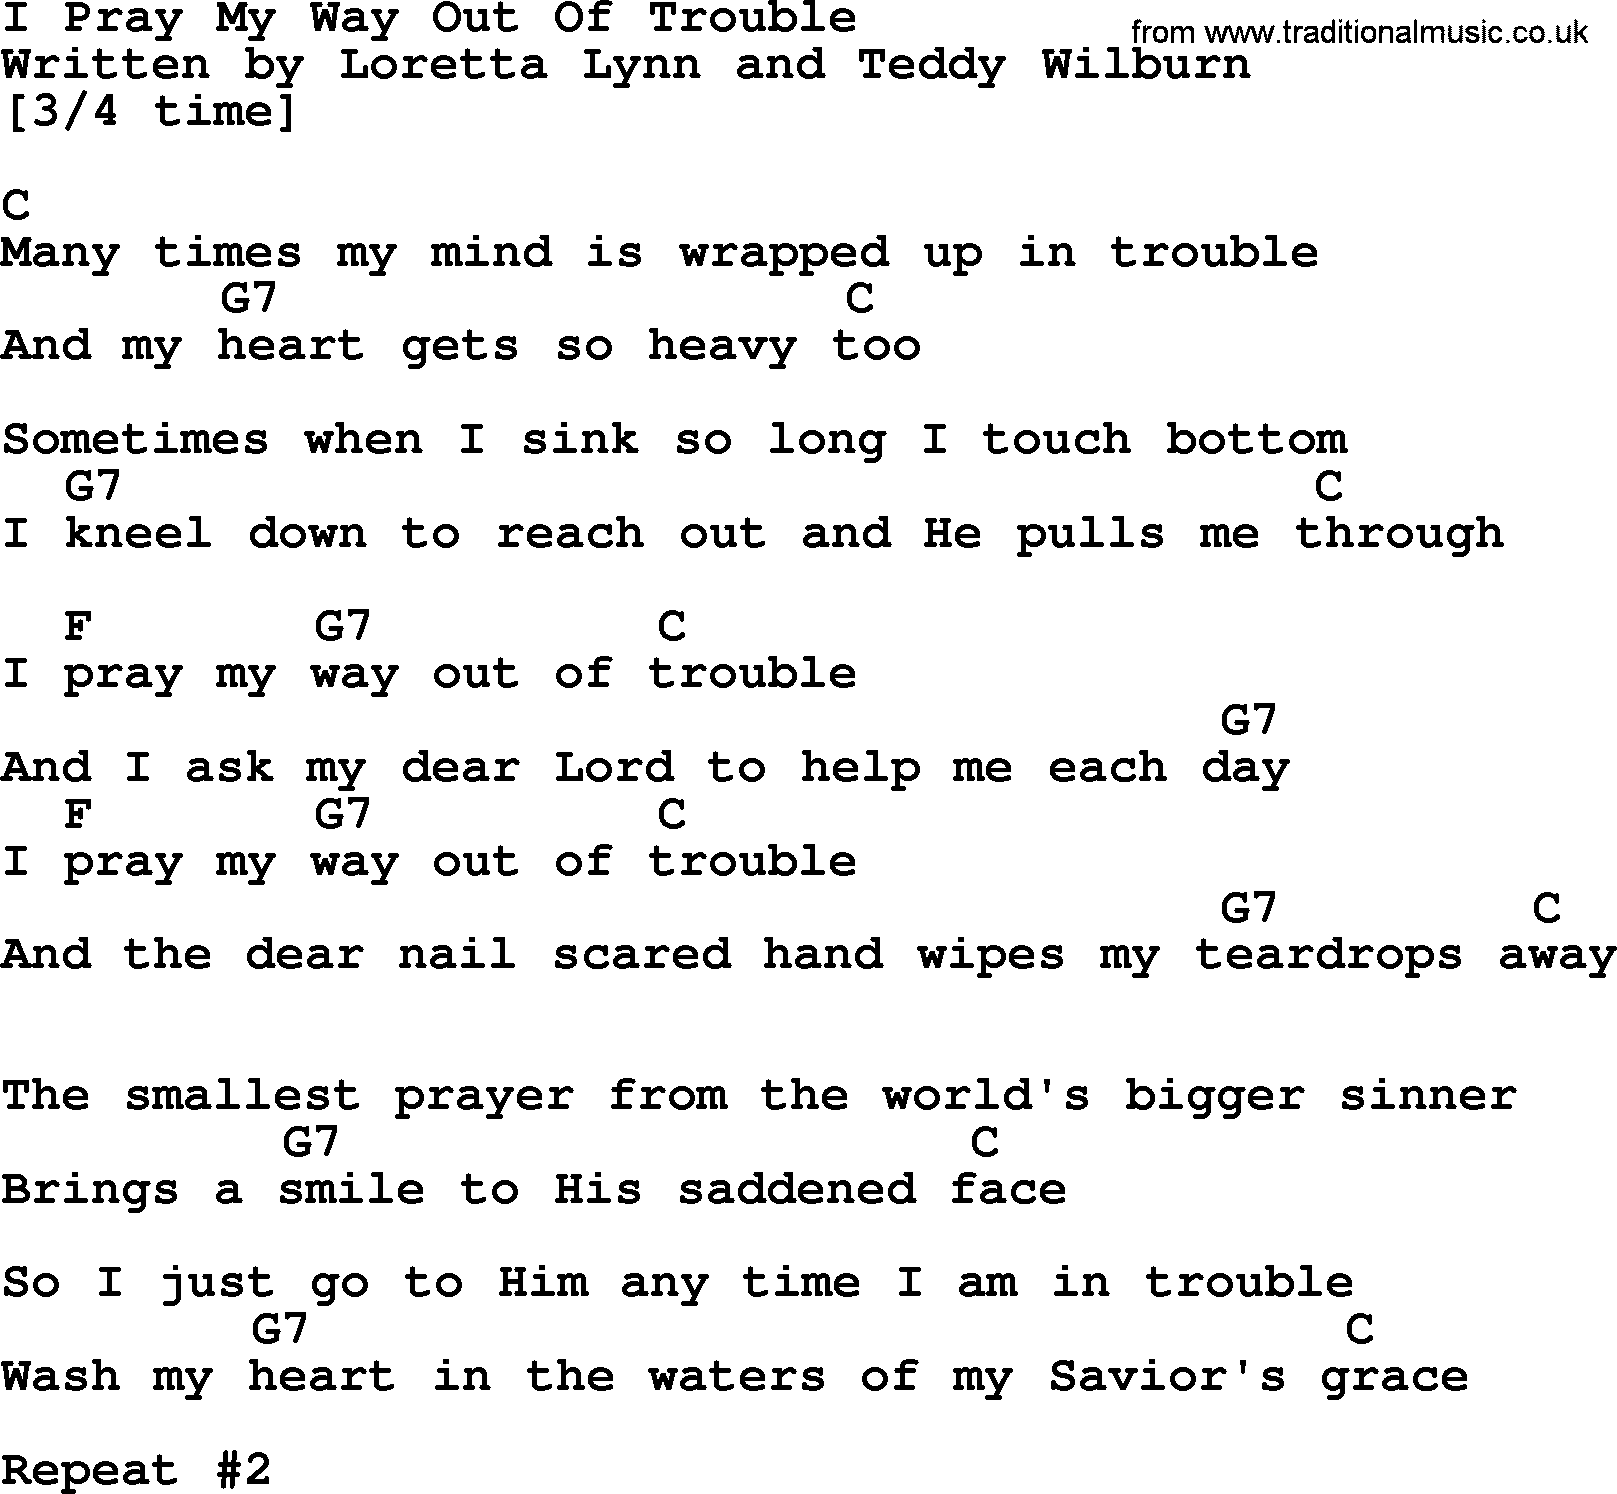 Loretta Lynn song: I Pray My Way Out Of Trouble lyrics and chords